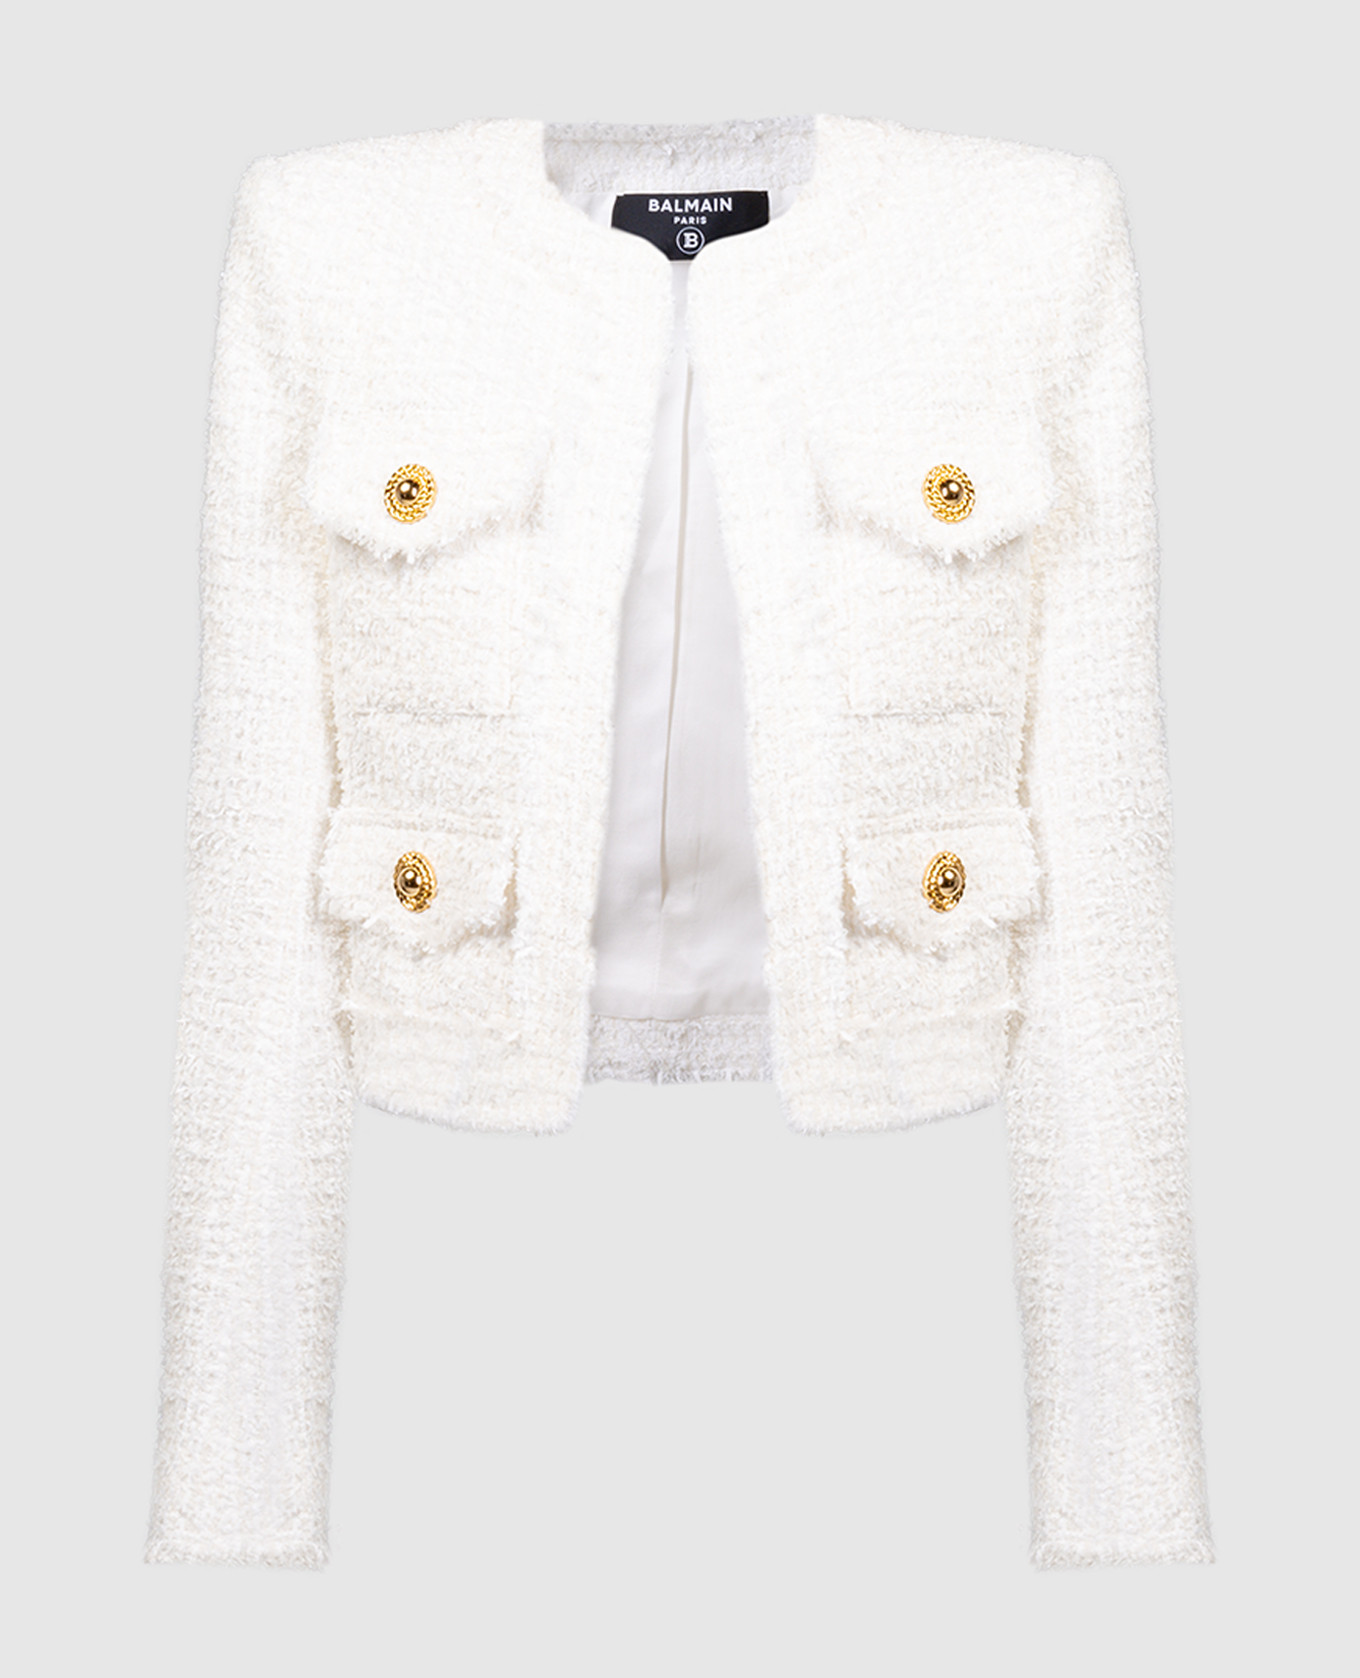 White tweed jacket